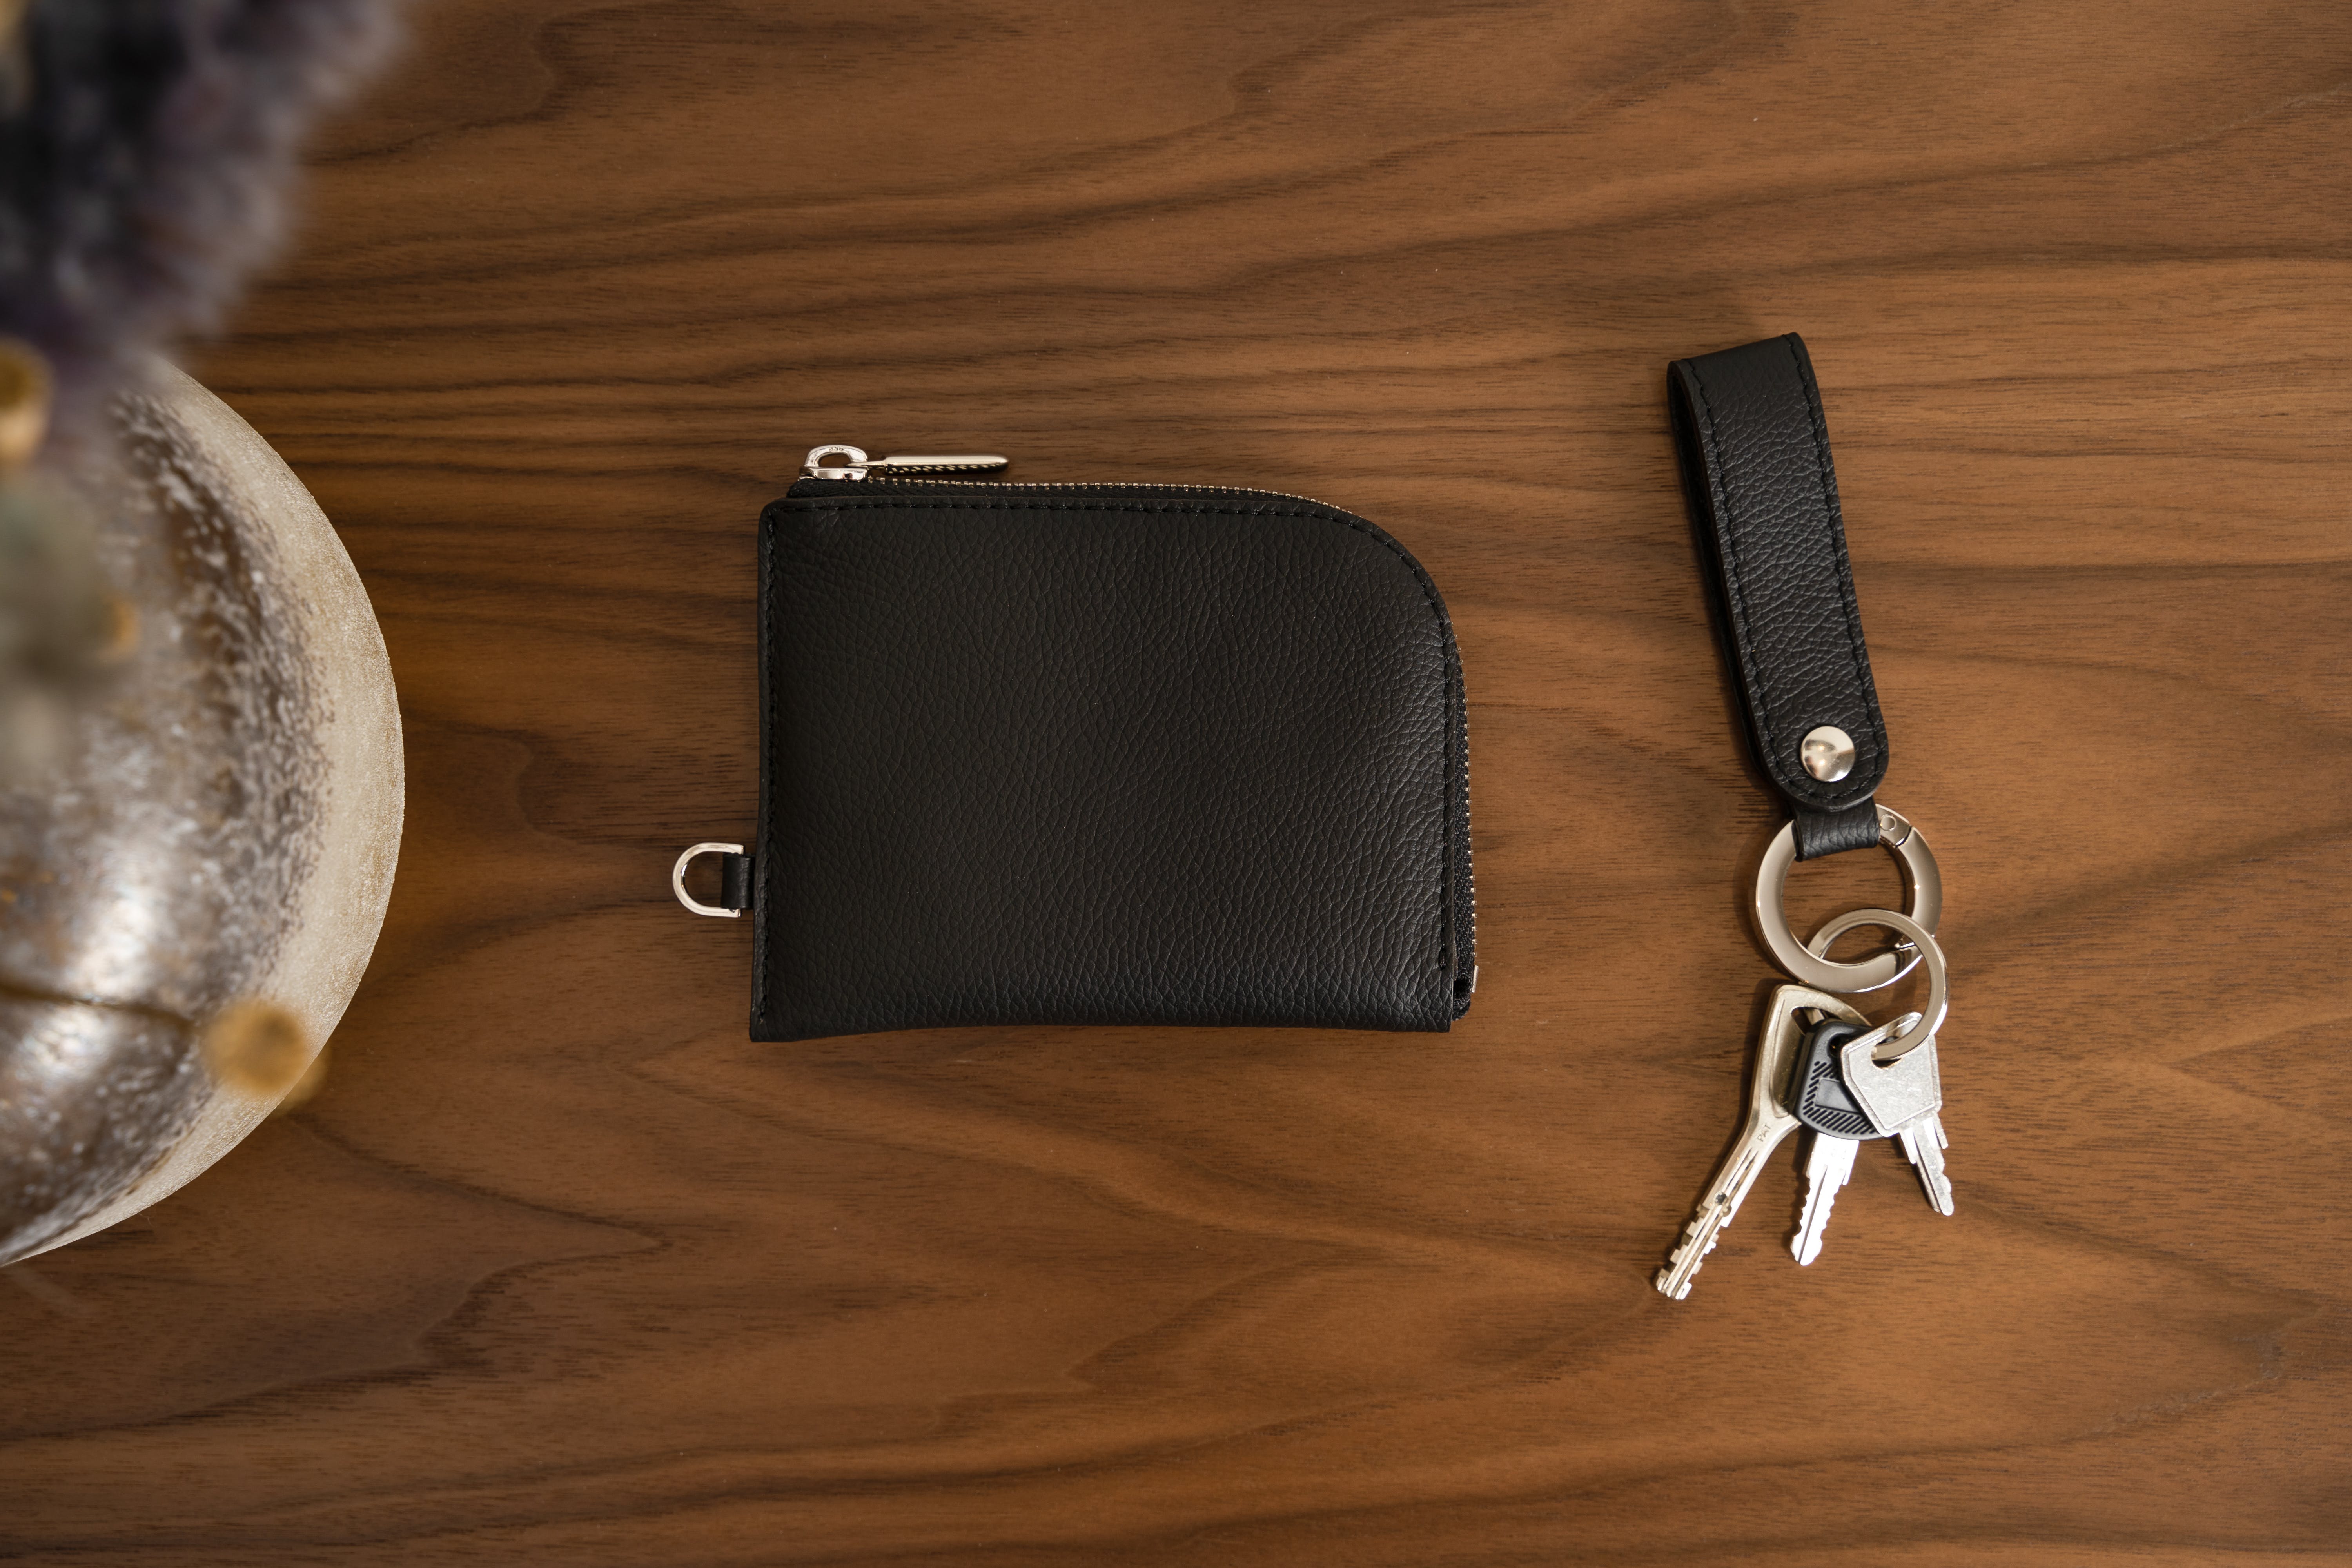 Wallet and keys on desktop